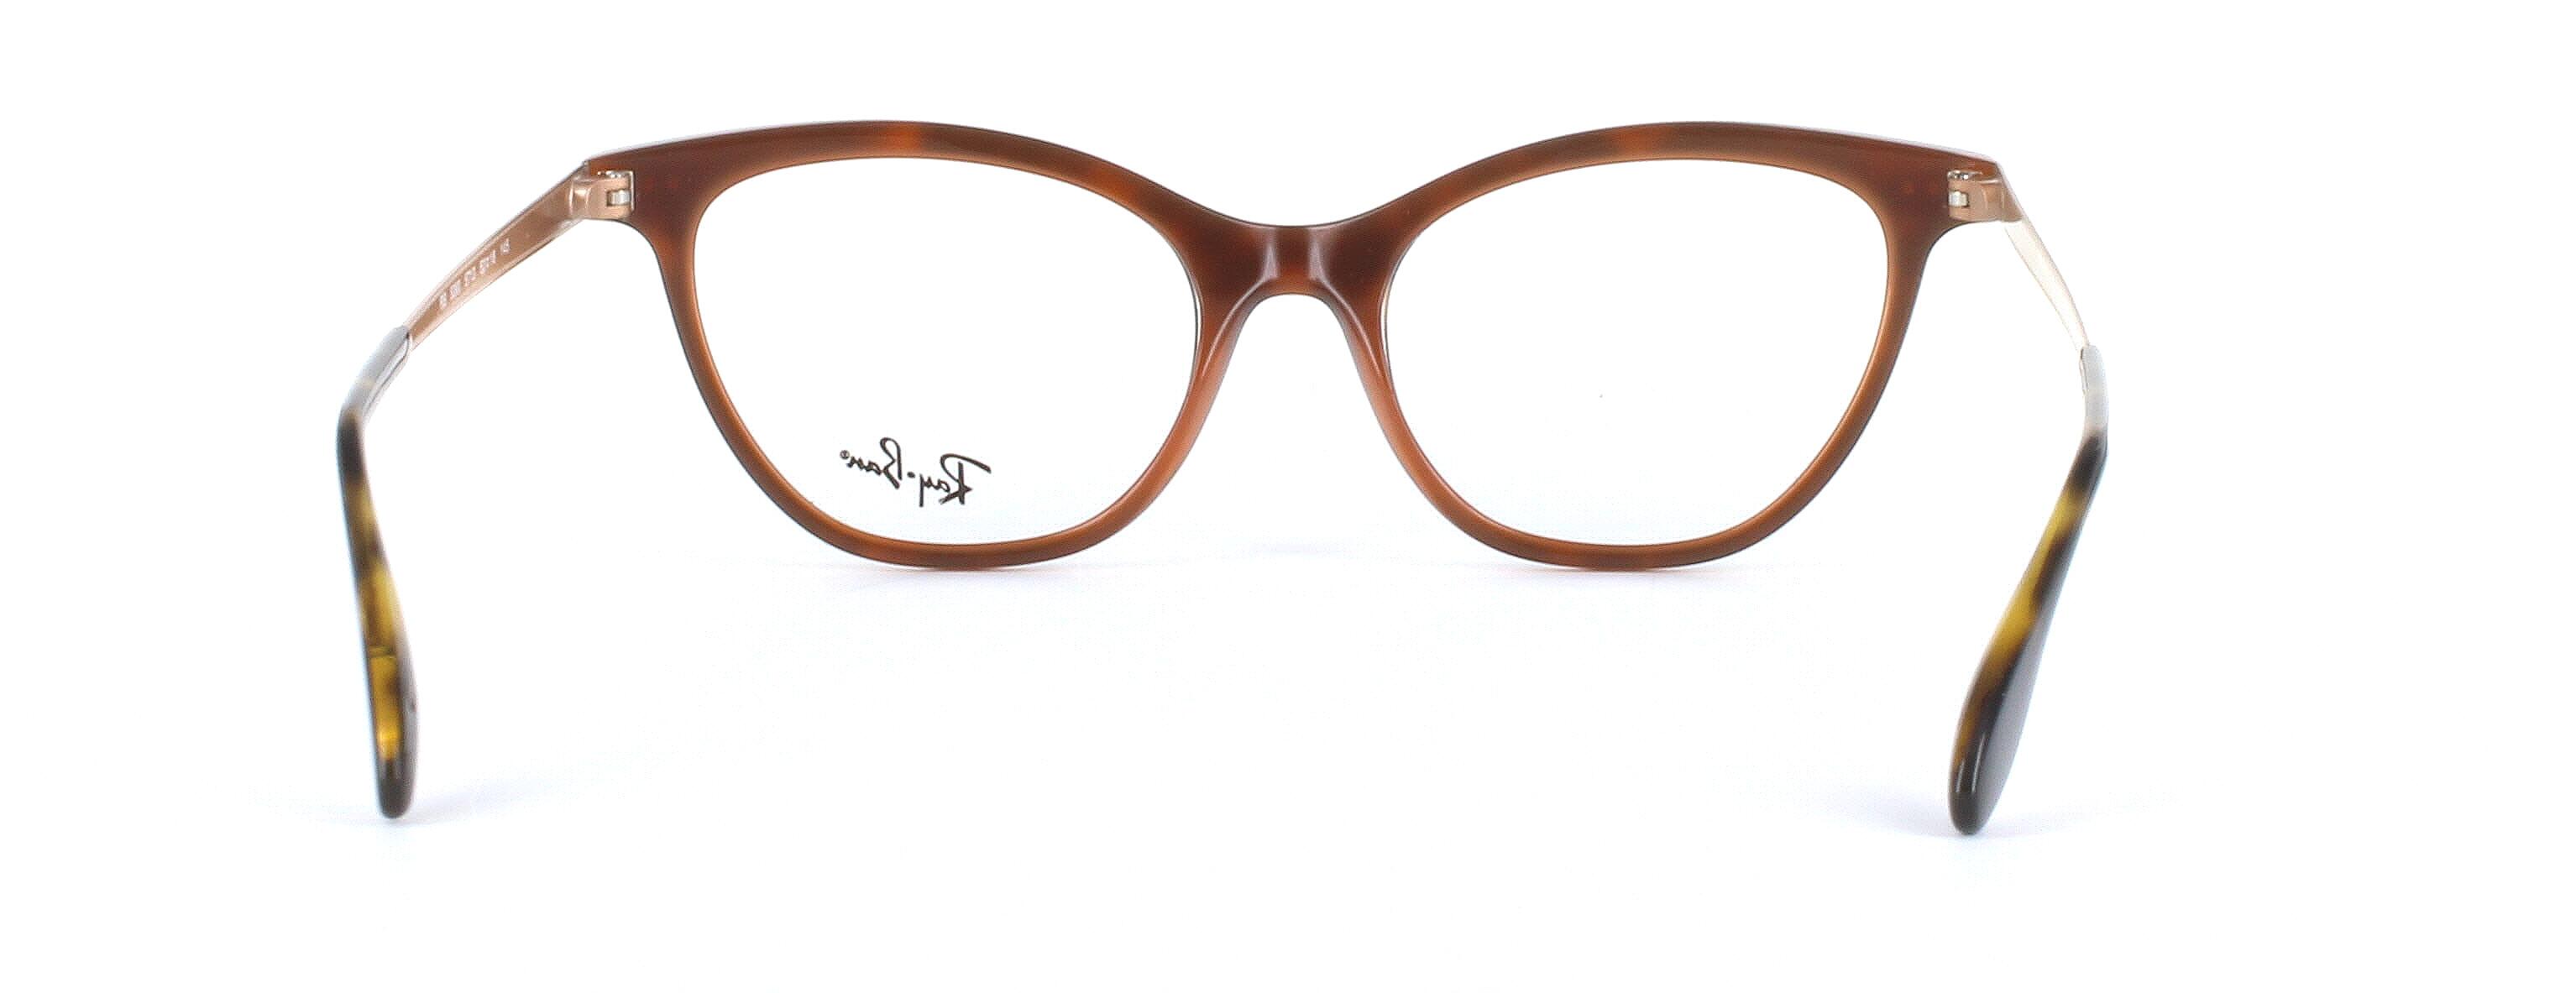 Ray Ban 5360 - Ladies acetate glasses - image view 3